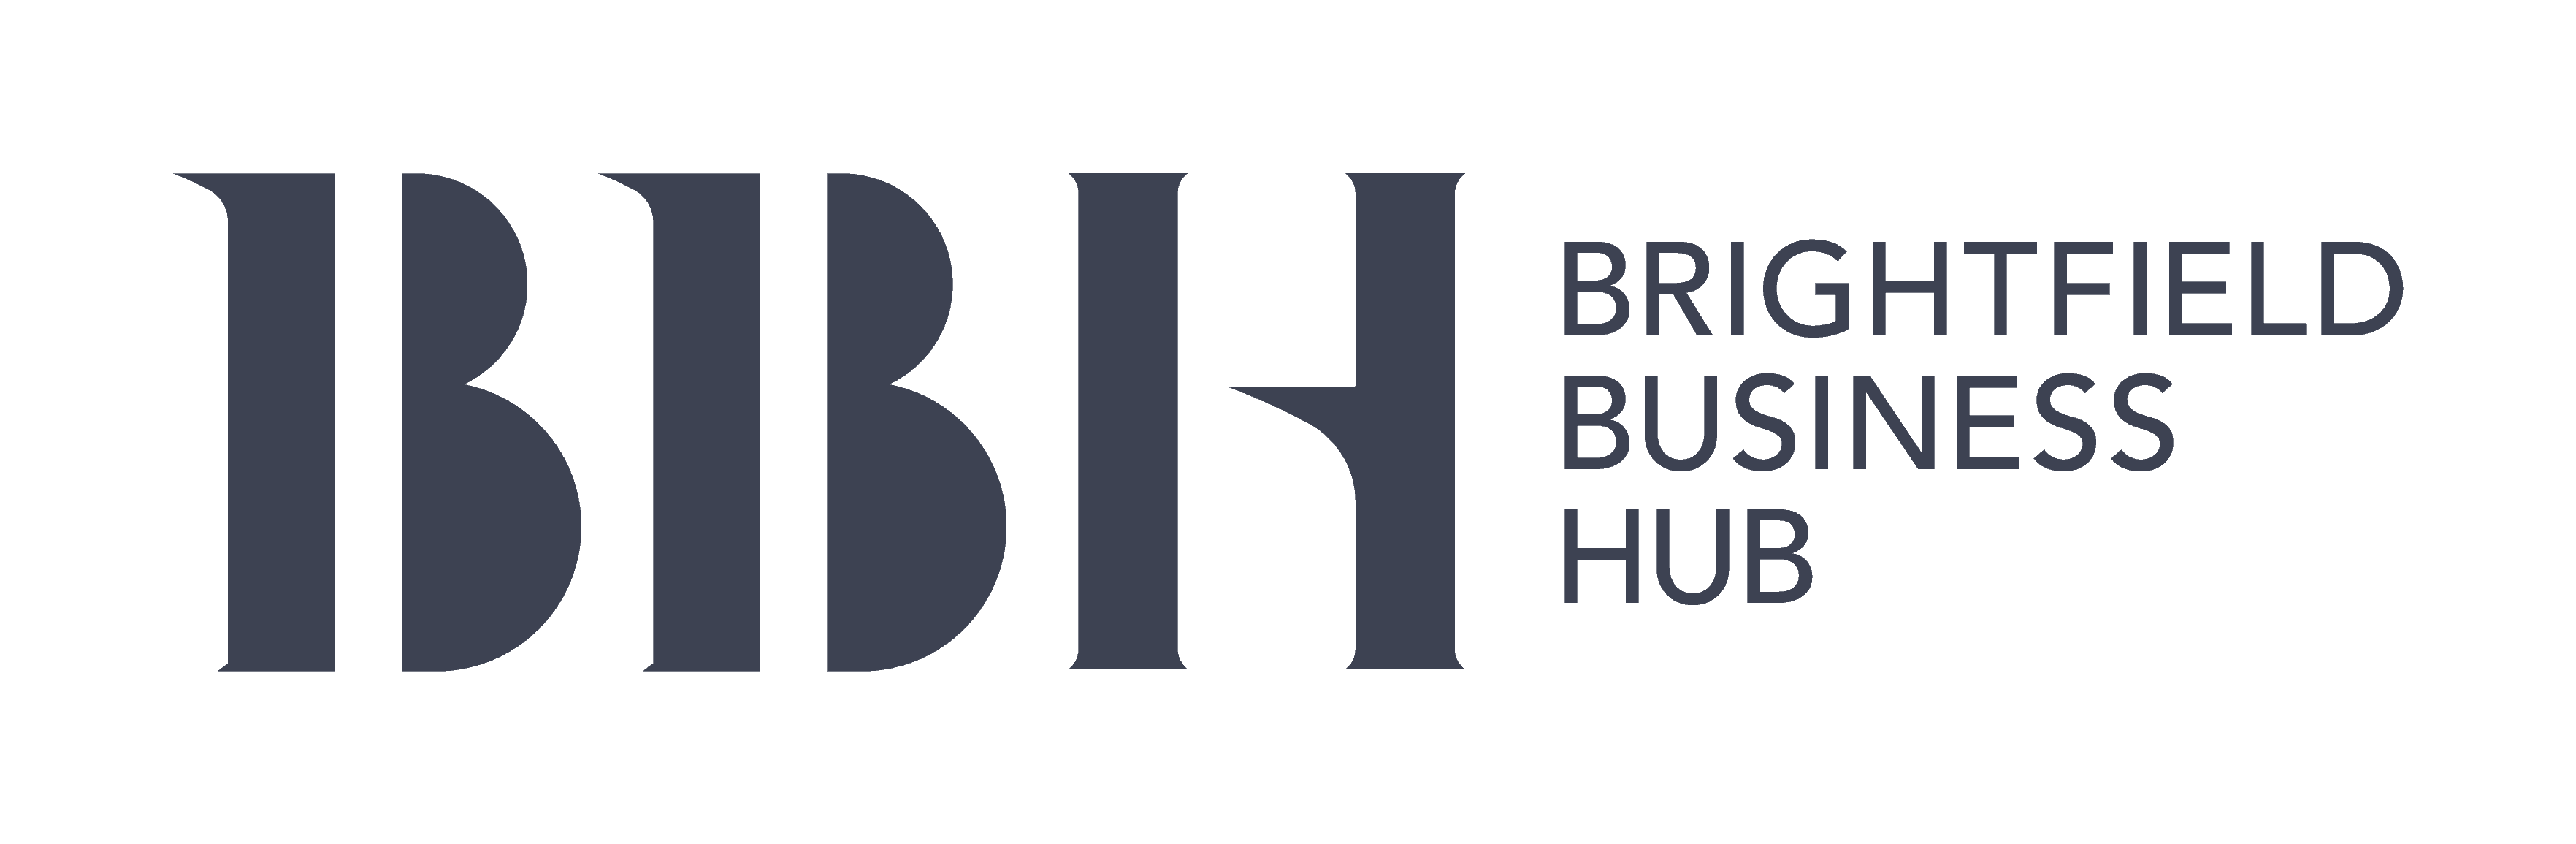 Brightfield Business Hub website design Blue Dolphin